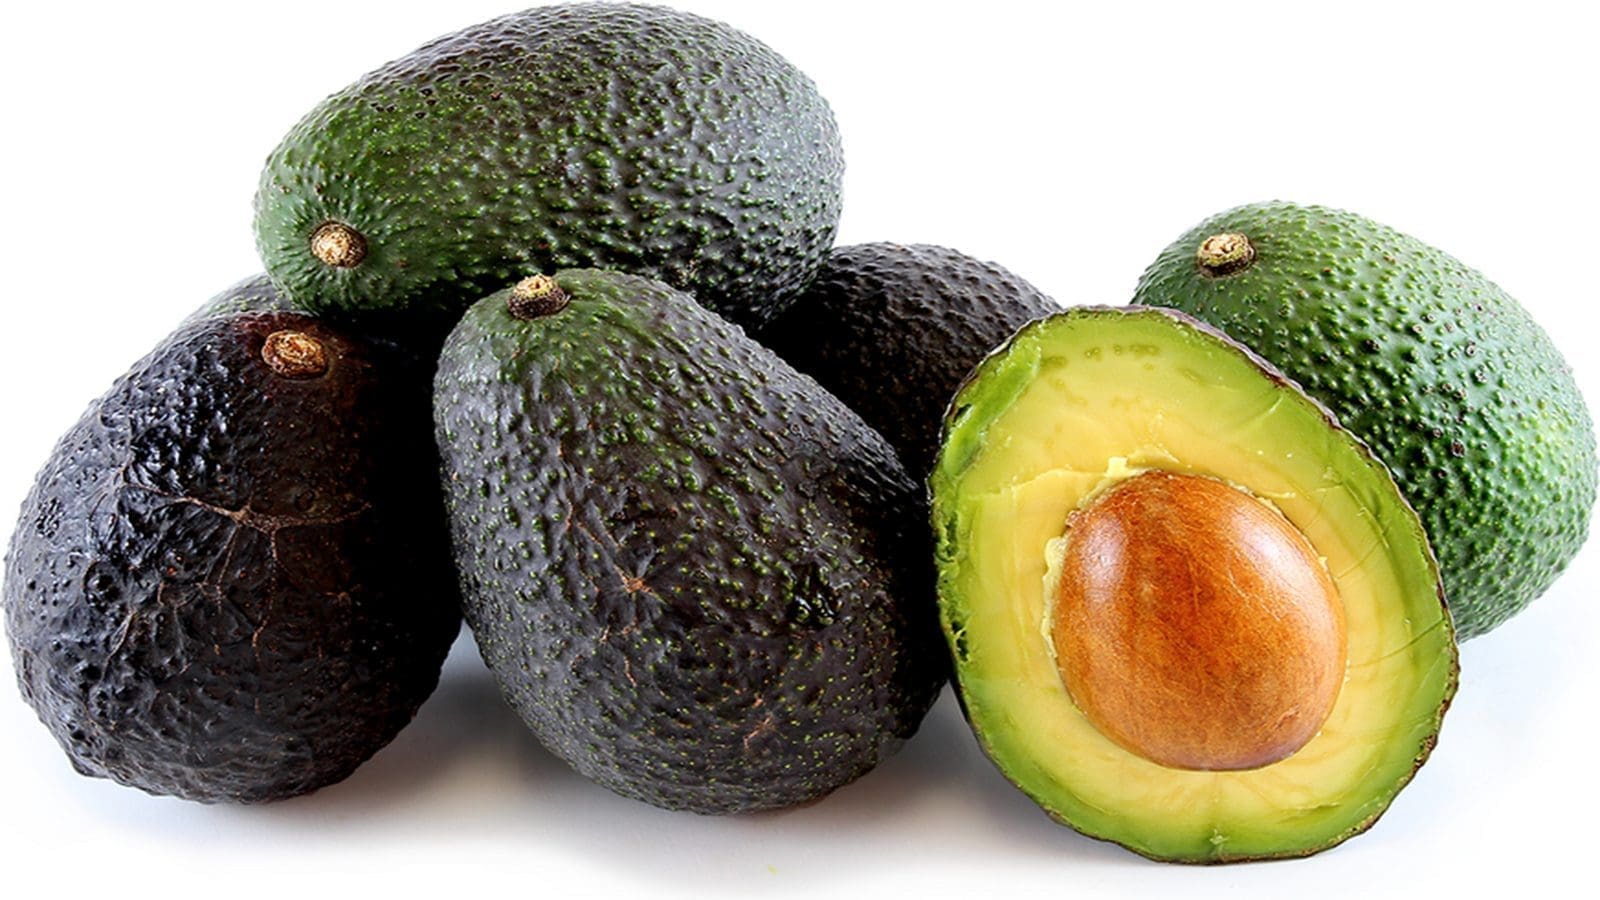 Kakuzi to commence avocado harvests, exports in mid-May